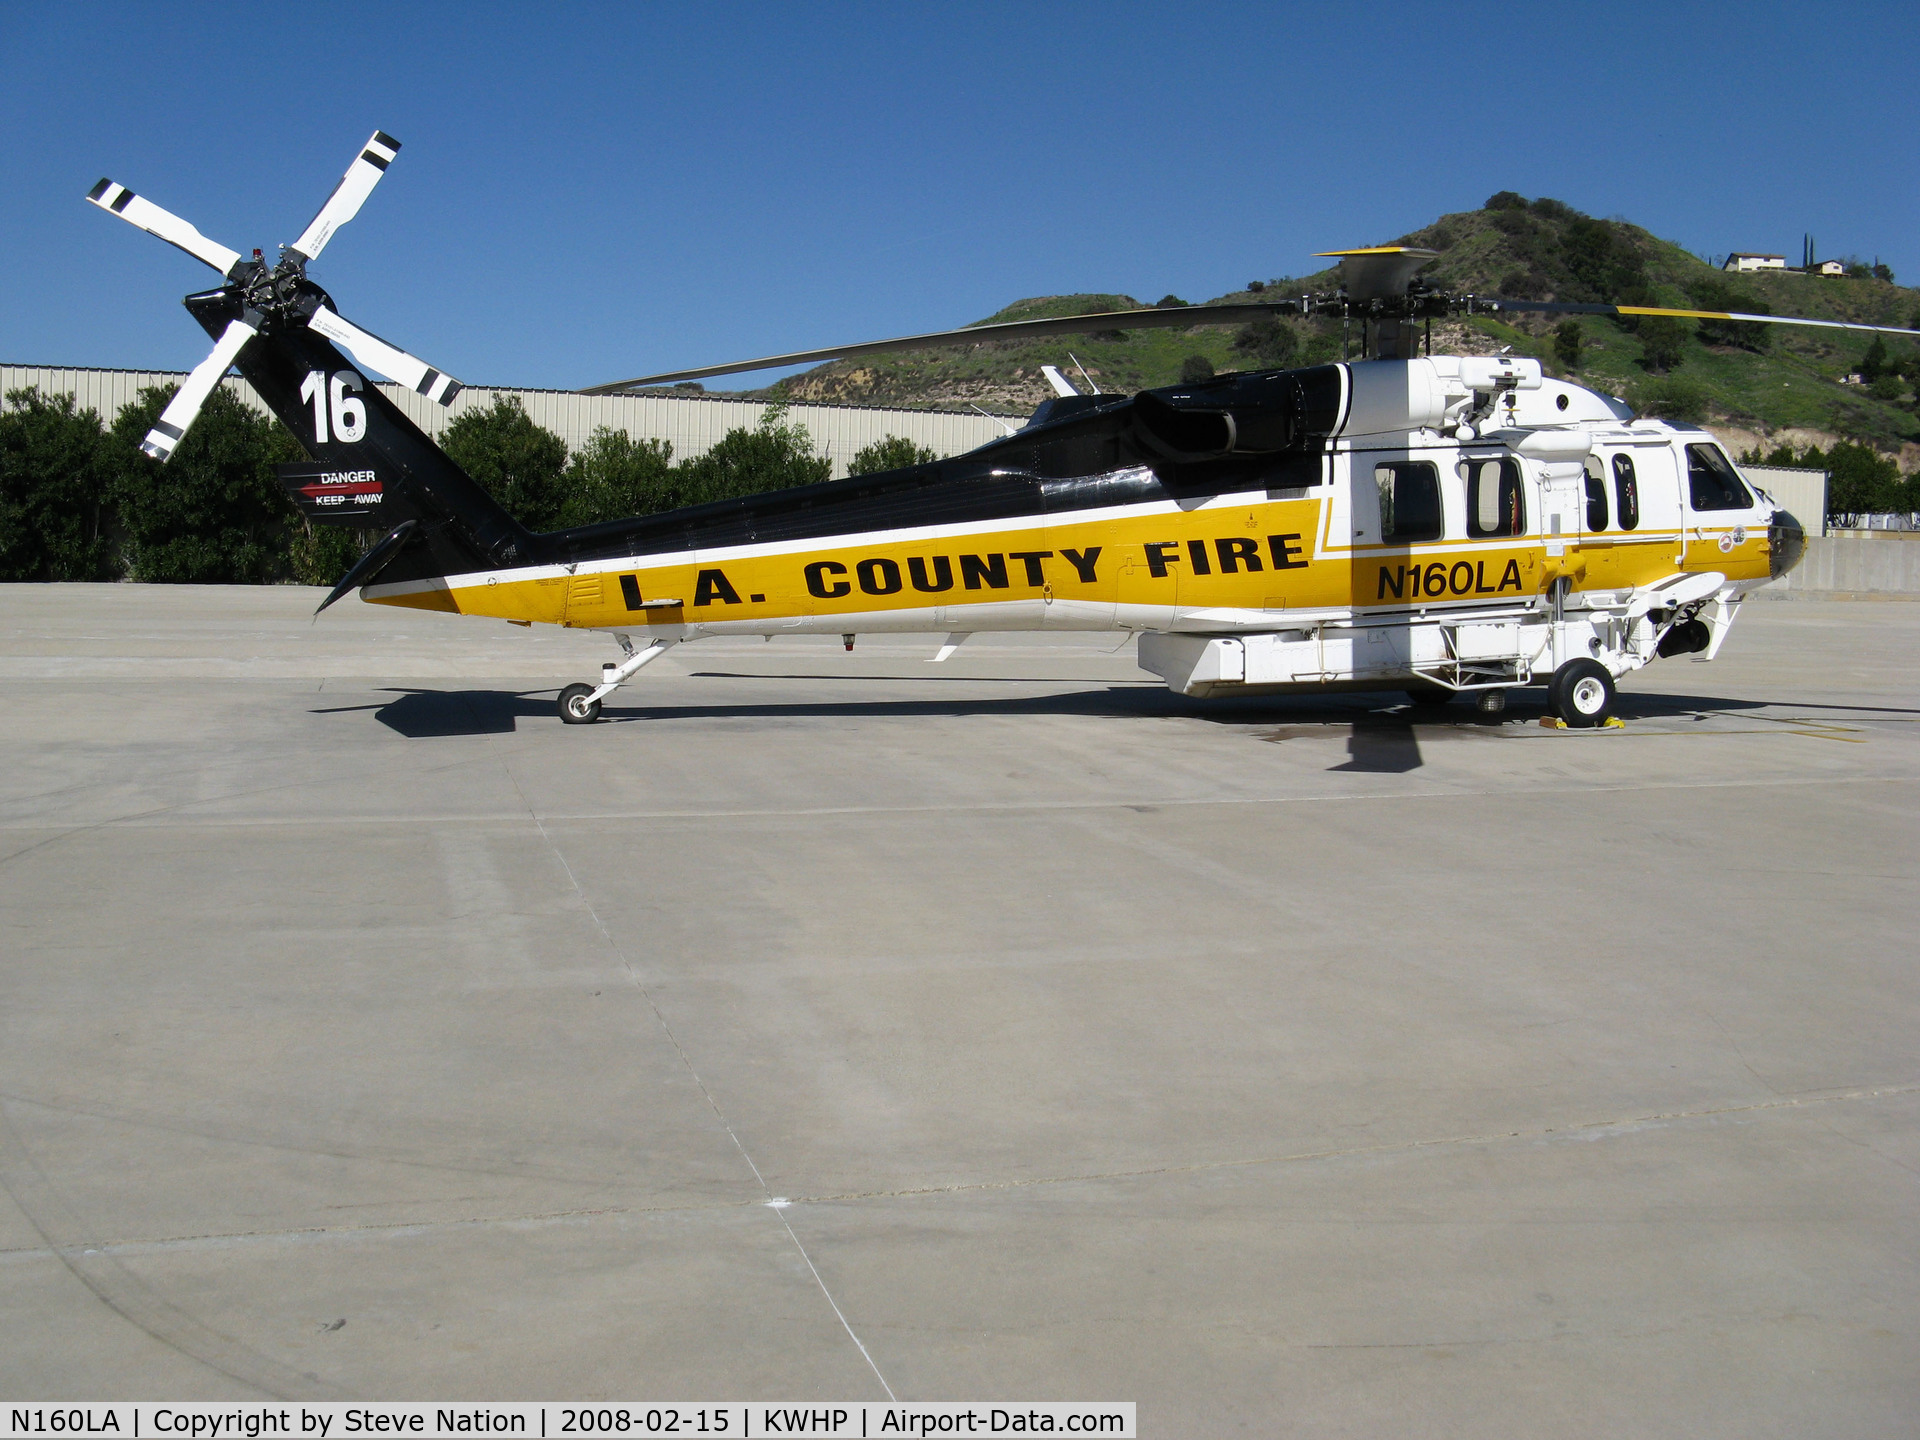 N160LA, 2000 Sikorsky S-70A Firehawk C/N 702453, Los Angeles County Fire 2000 Sikorsky S-70A Firehawk Helitanker #16 on ramp @ Whiteman Airport, Pacoima, CA home base